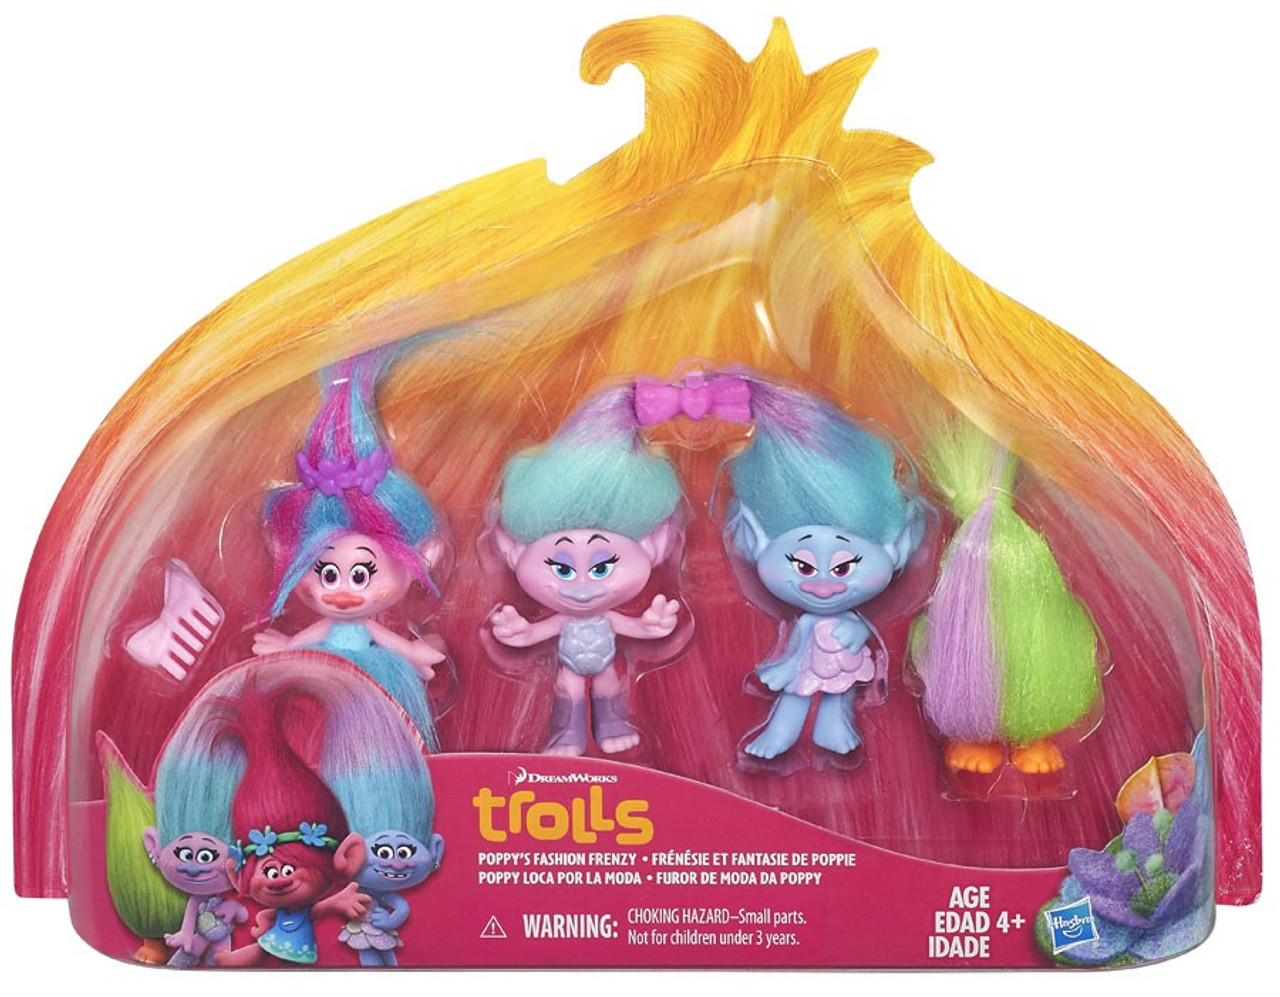 Trolls Troll Town Poppys Fashion Frenzy Figure 4-Pack Hasbro Toys - ToyWiz